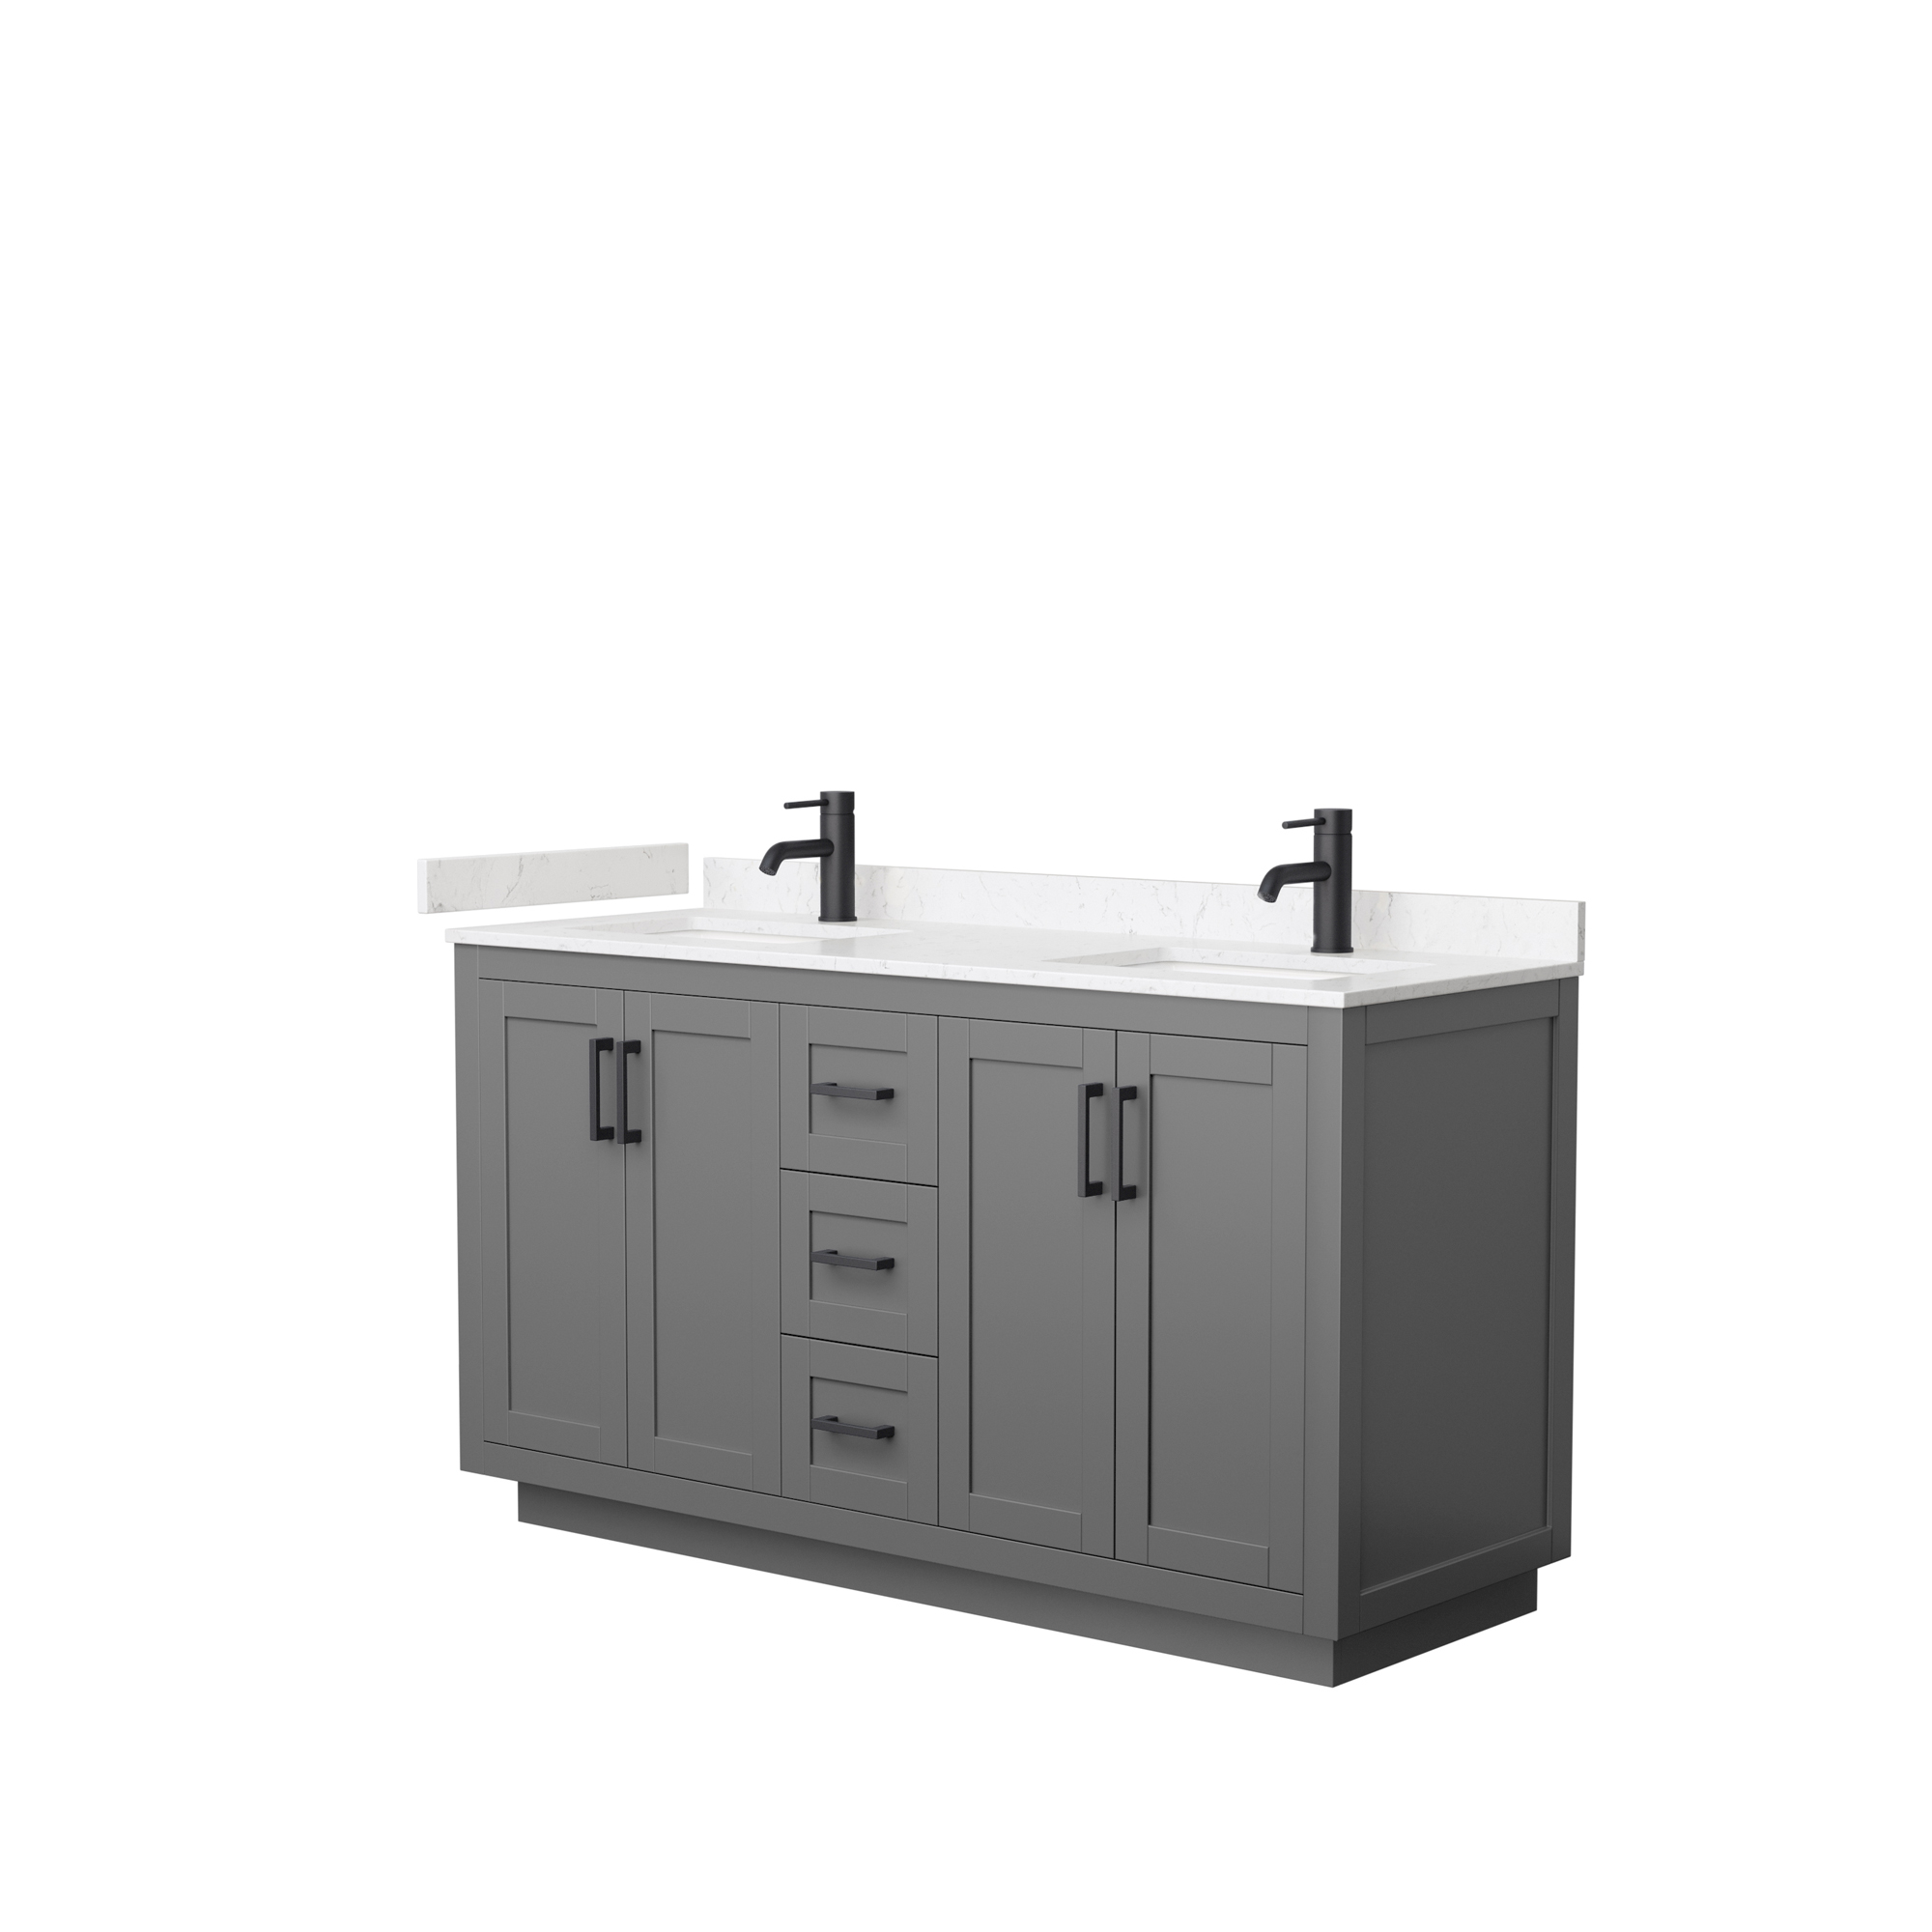 60" Double Bathroom Vanity in Dark Gray, Light-Vein Carrara Cultured Marble Countertop, Undermount Square Sinks, Matte Black Trim